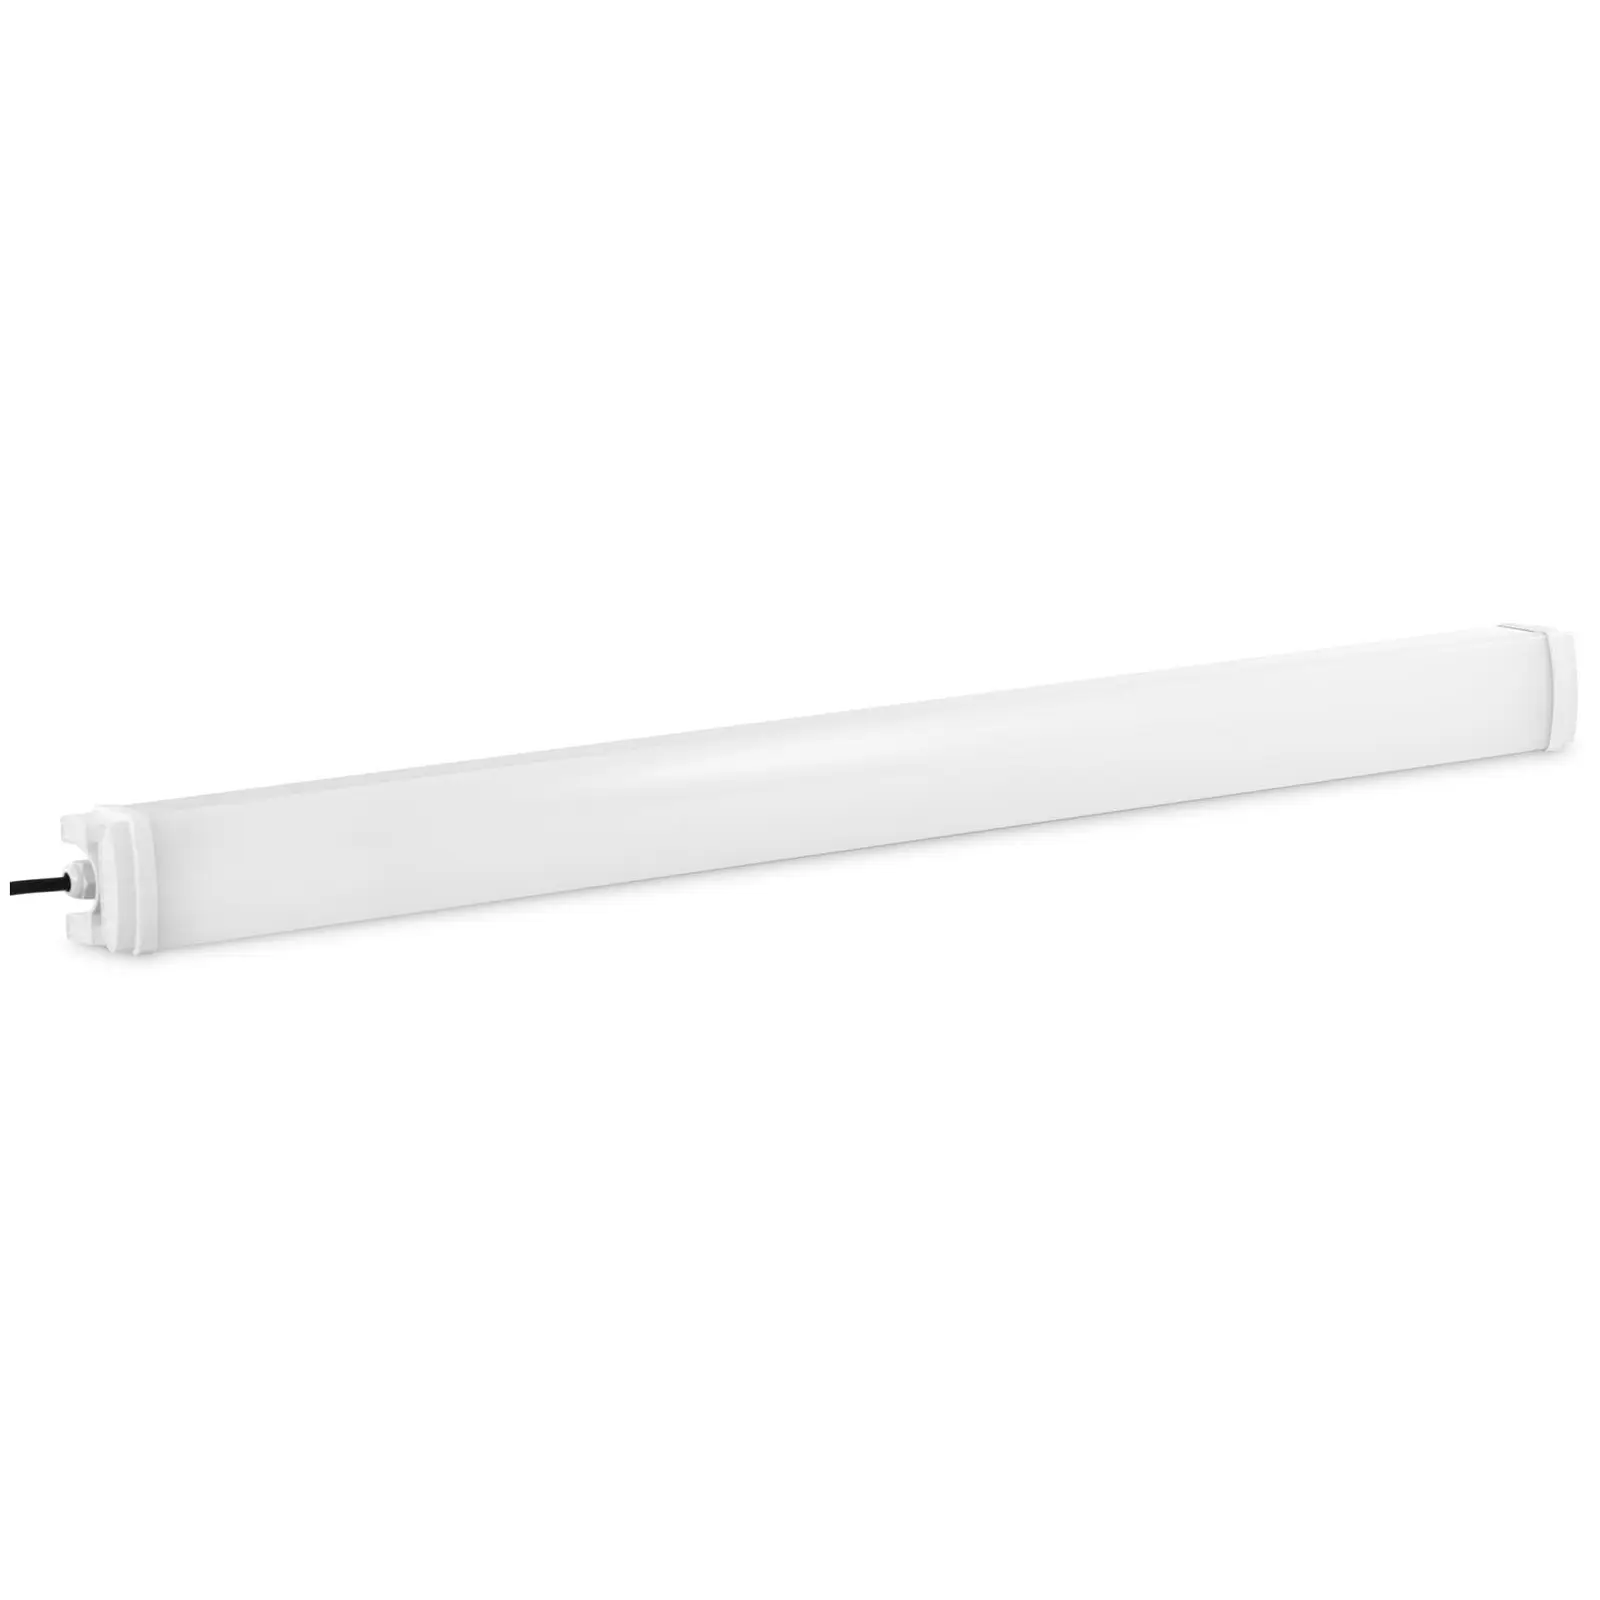 LED impermeabile - 40 W - 120 cm